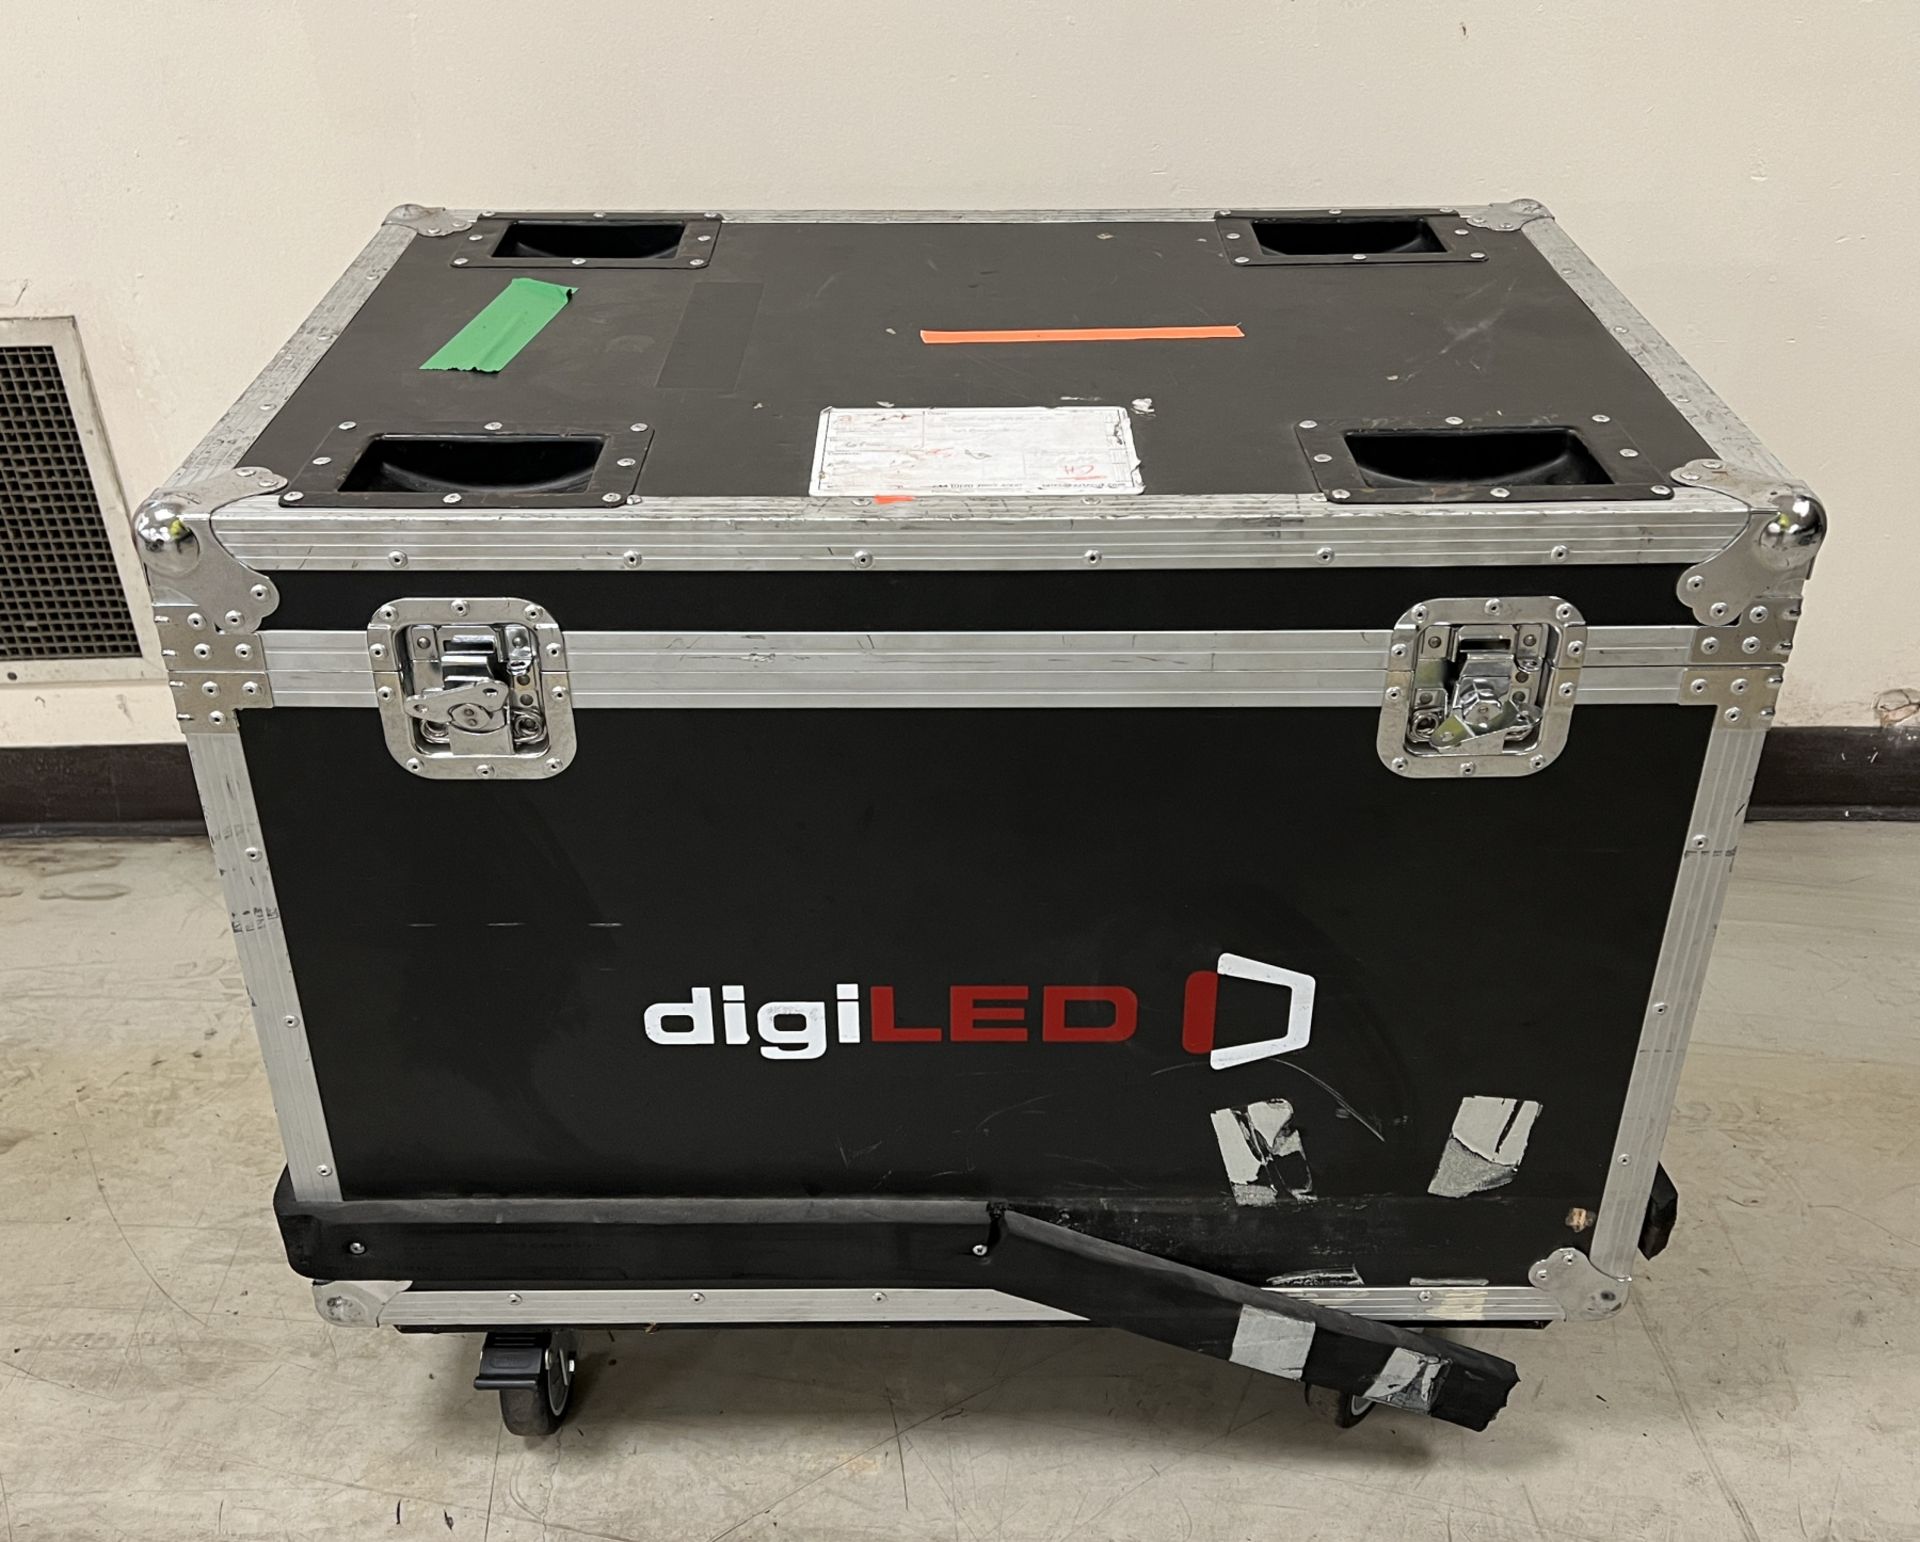 Digi LED HRI3900 kit - 120 LED tiles housed in 20 wheeled flight cases - see description for details - Image 44 of 196